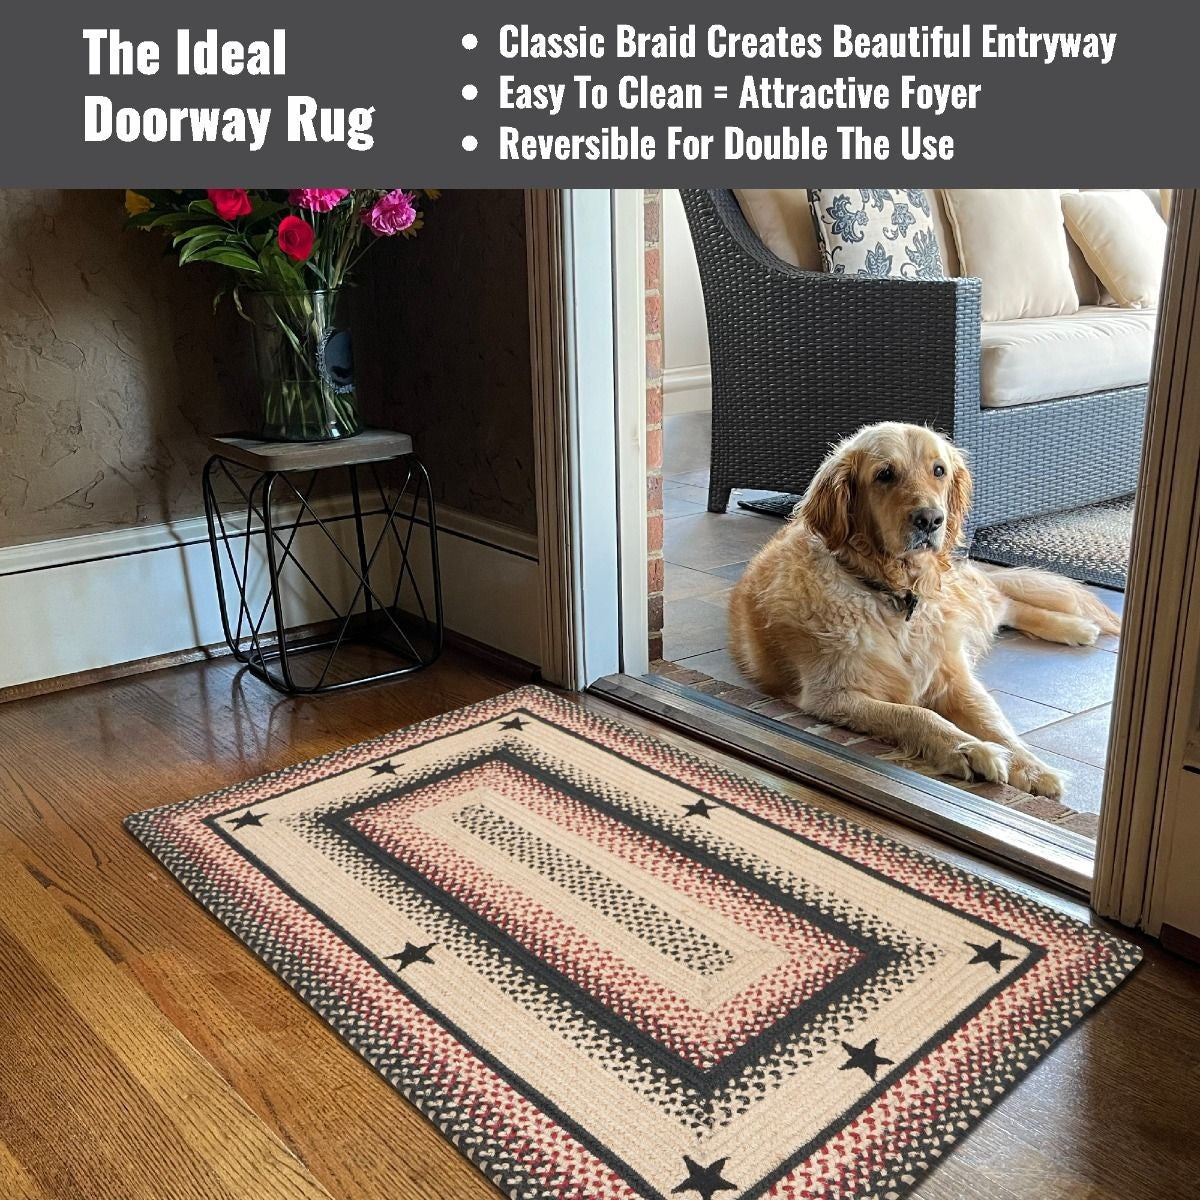 IHF HOME DECOR Rectangle Area Floor Carpet 22 X 72 Braided Rug New Star  Black Design Jute Fabric : : Home